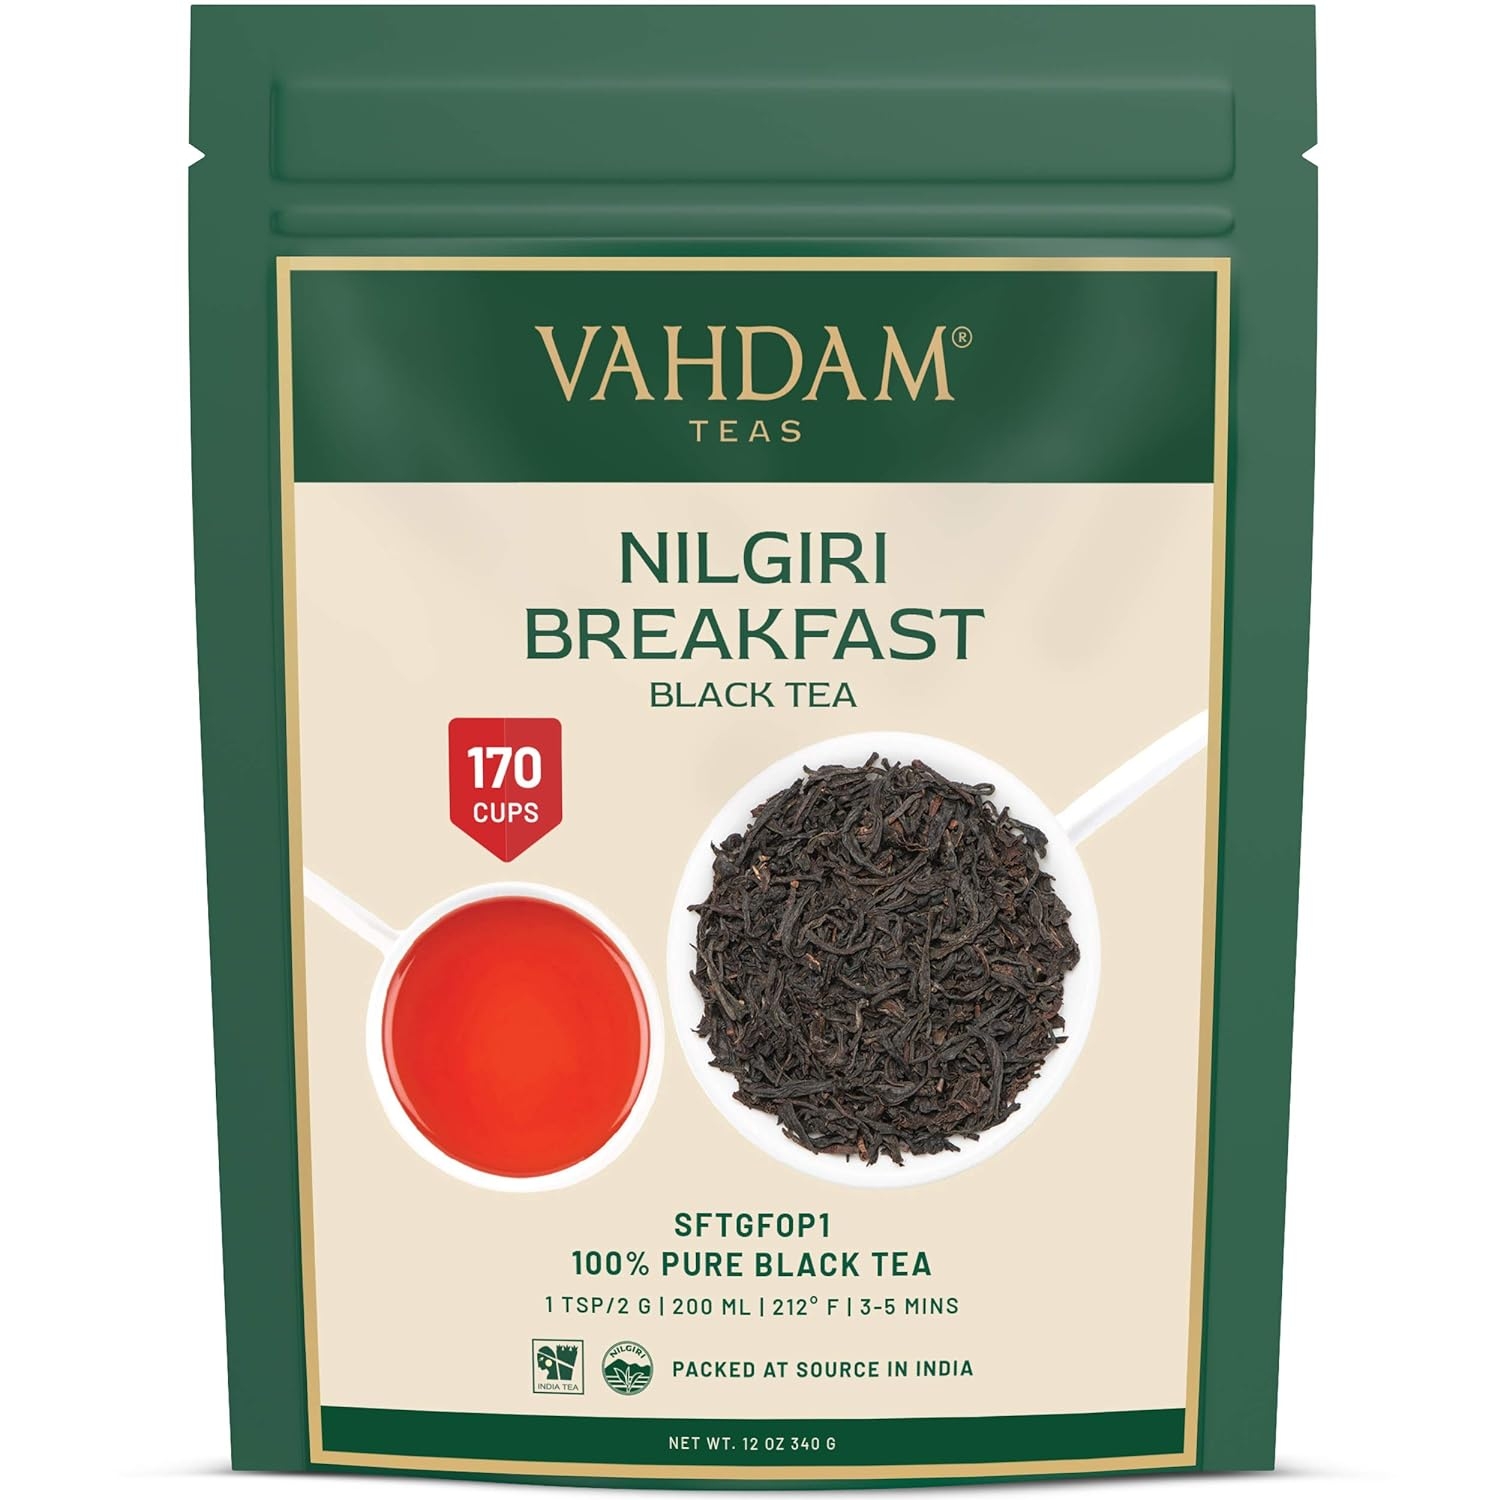 Nilgiri Breakfast Black Tea